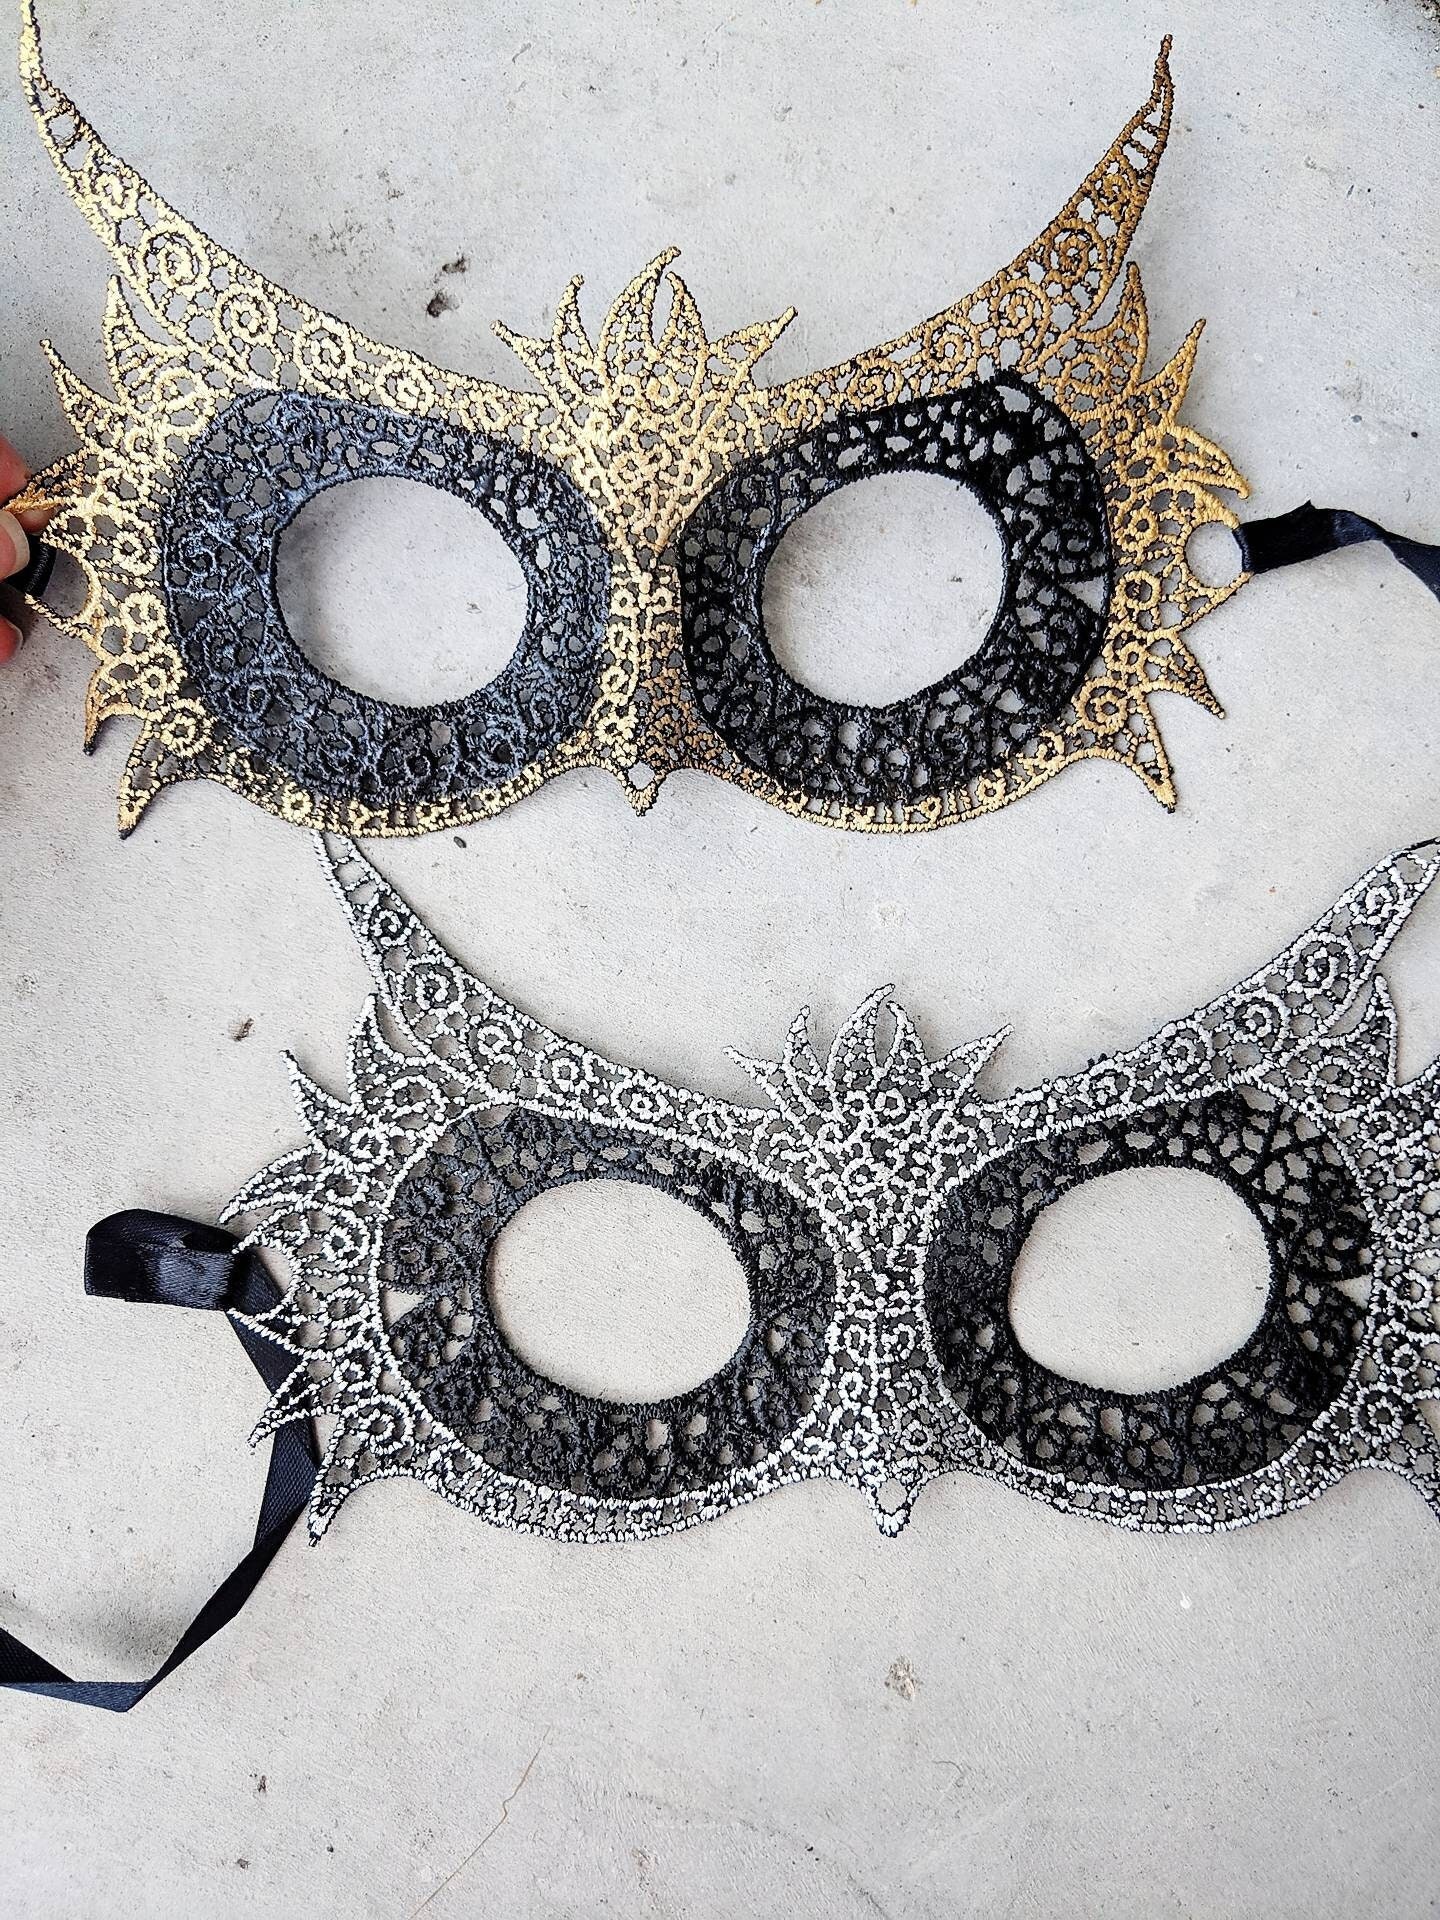 Filigree - Styles - Wearable Masks - Italy Mask